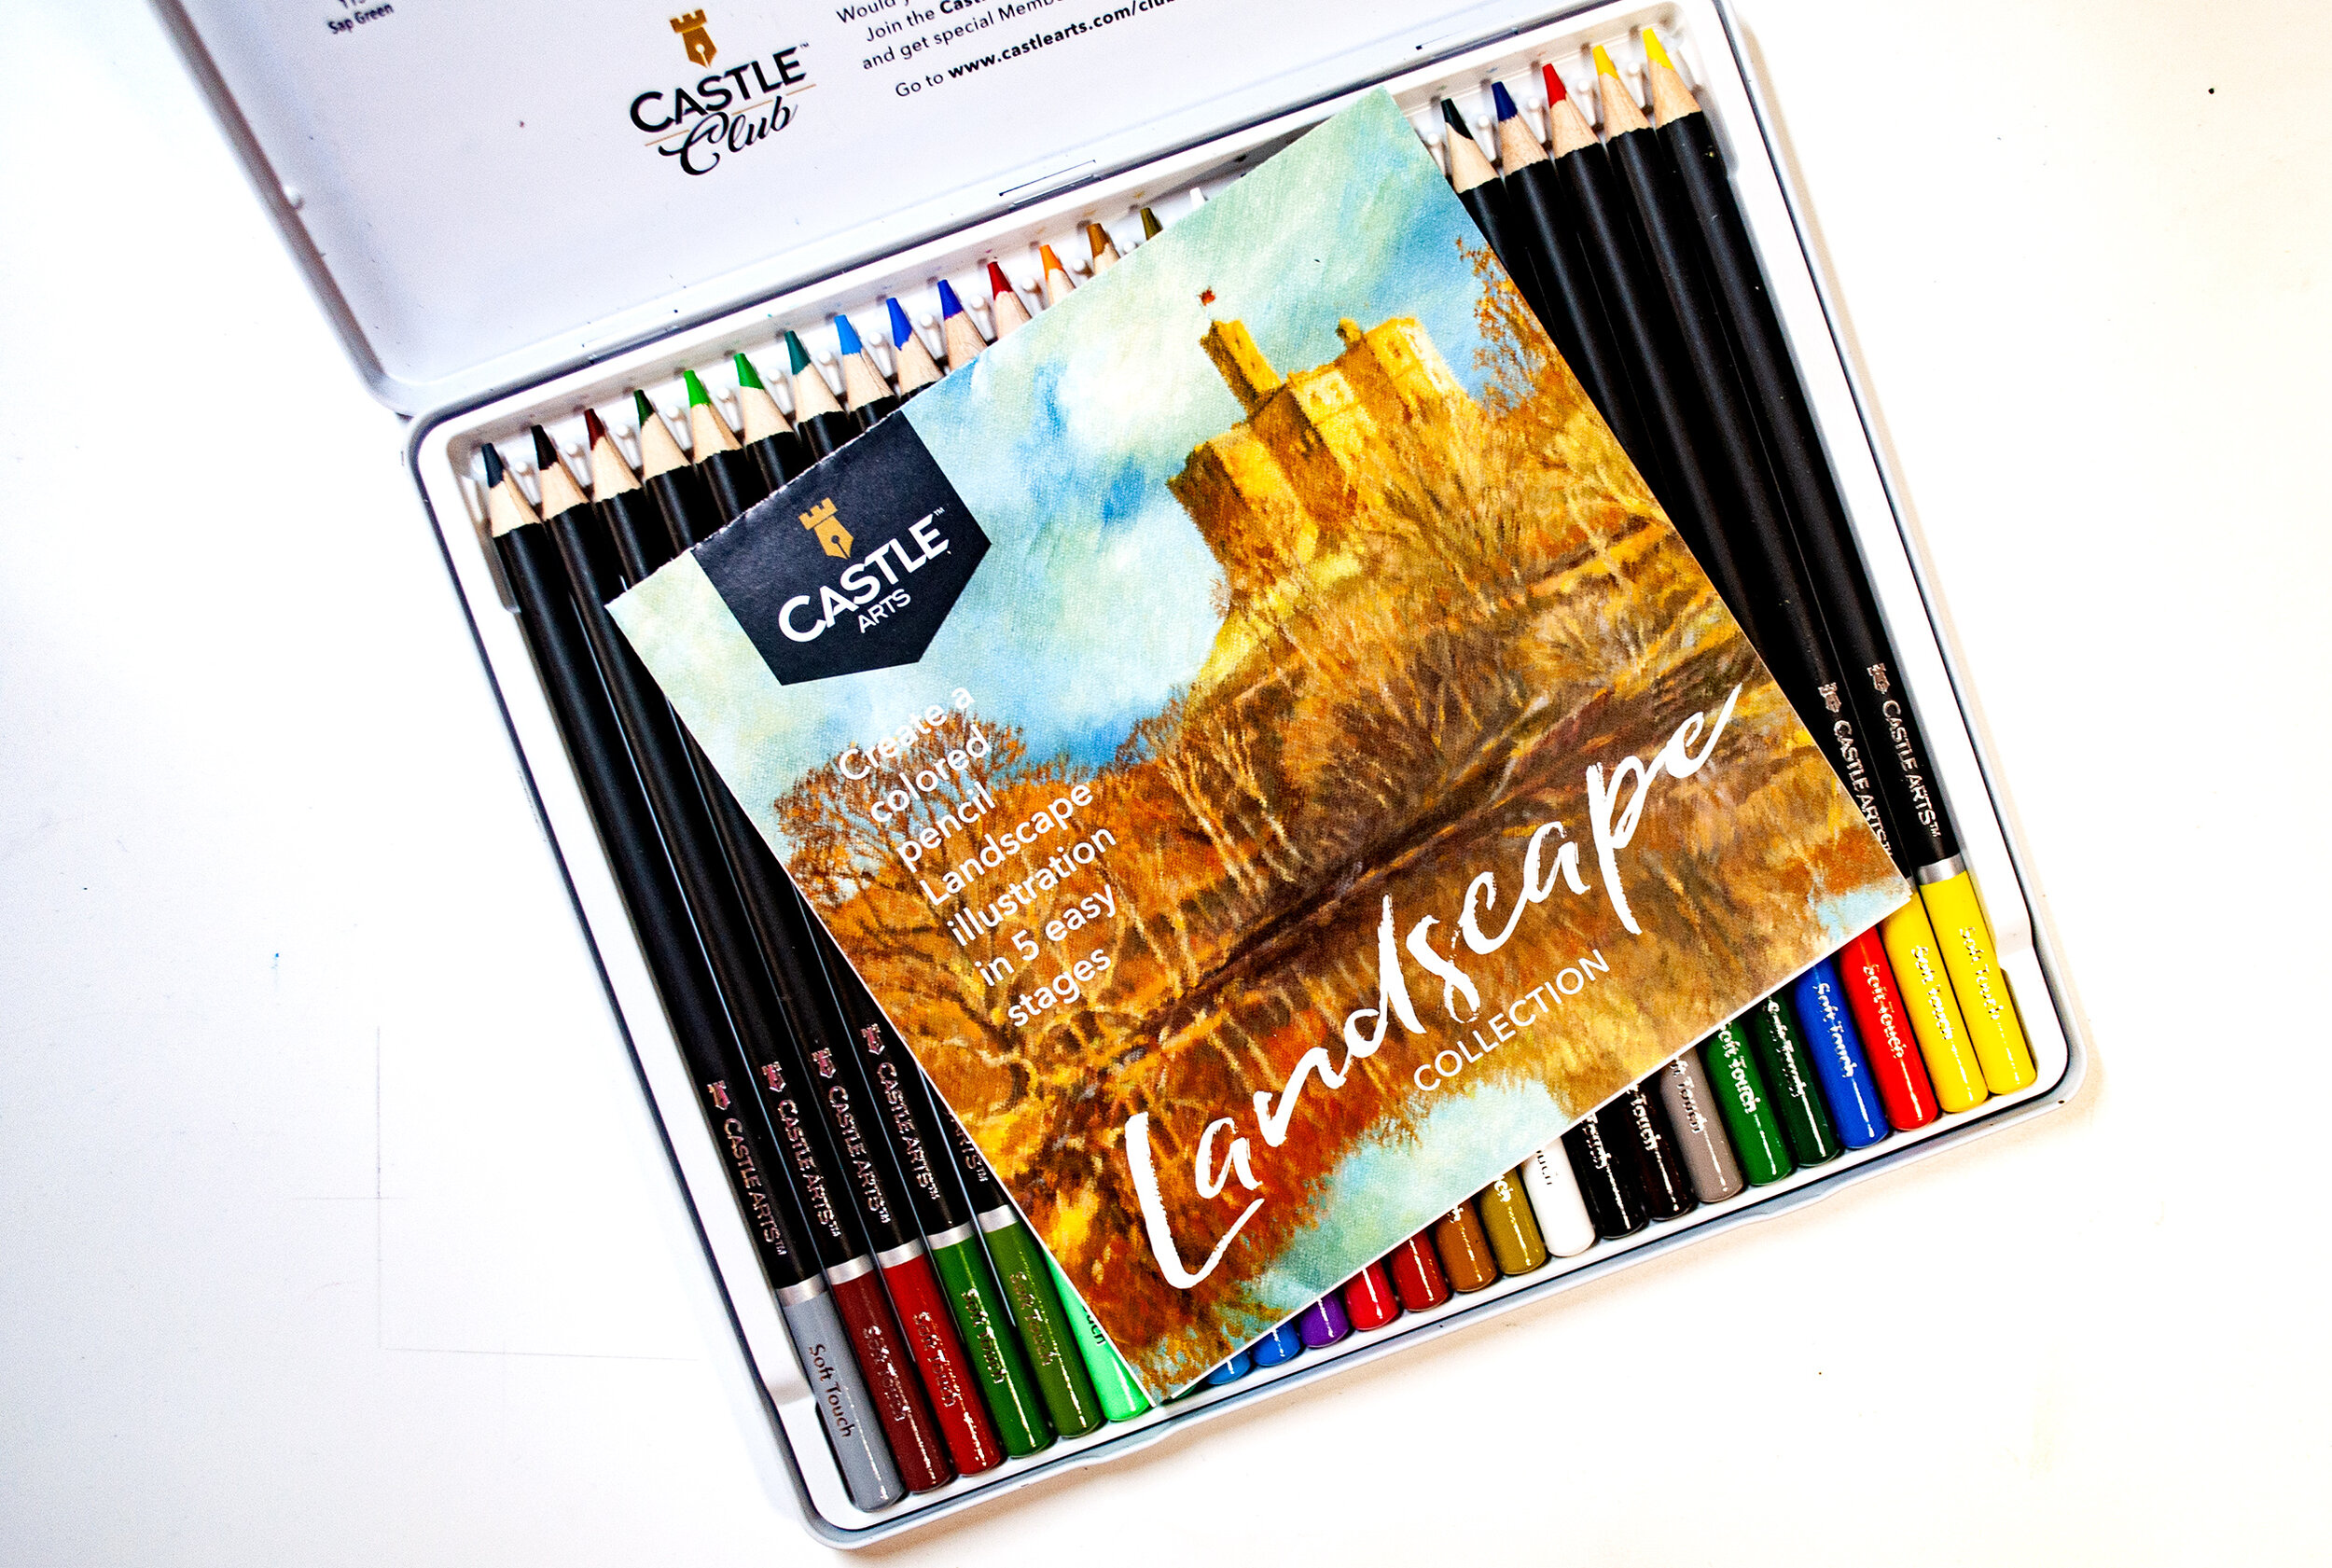 Castle Arts Themed 24 Colored Pencil Set in Tin Box